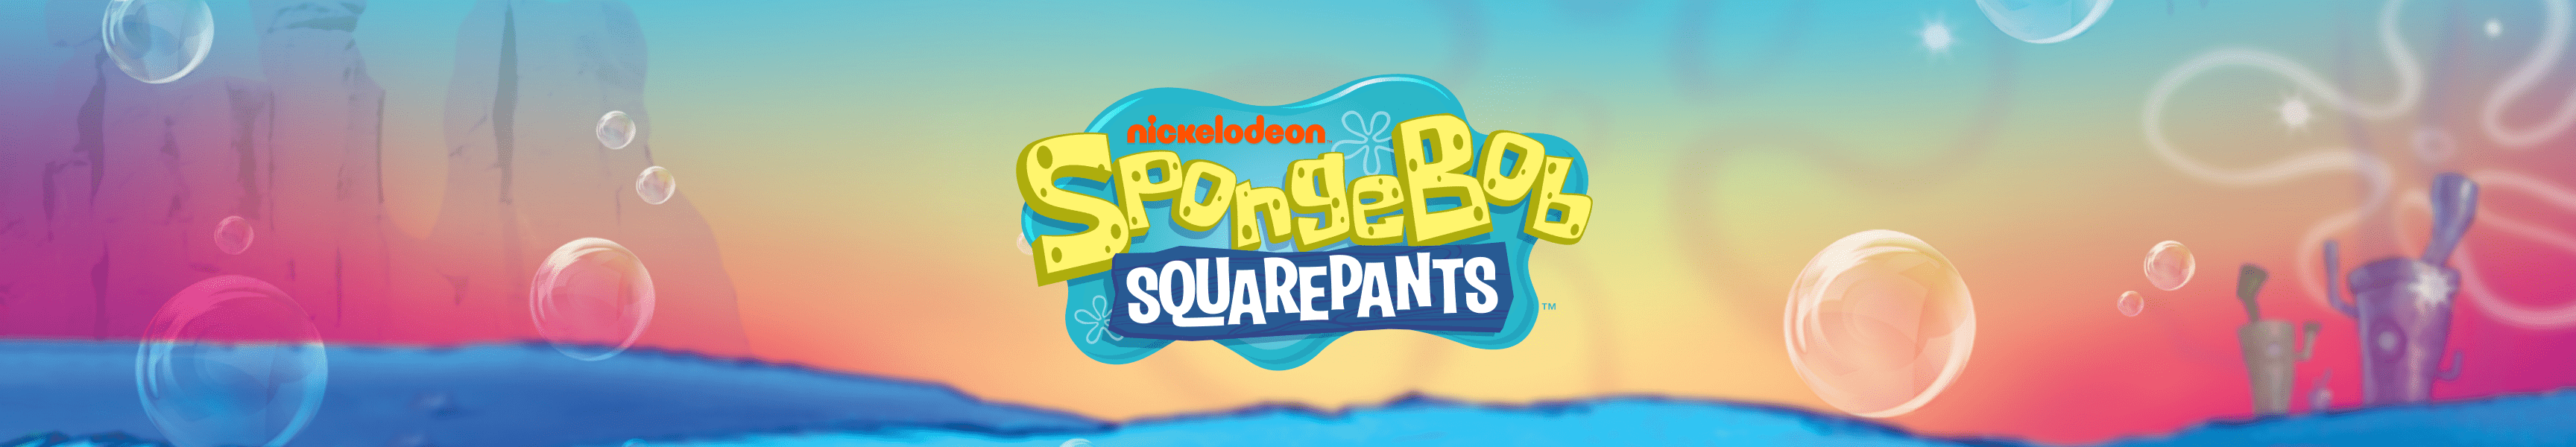 SpongeBob SquarePants Astrology